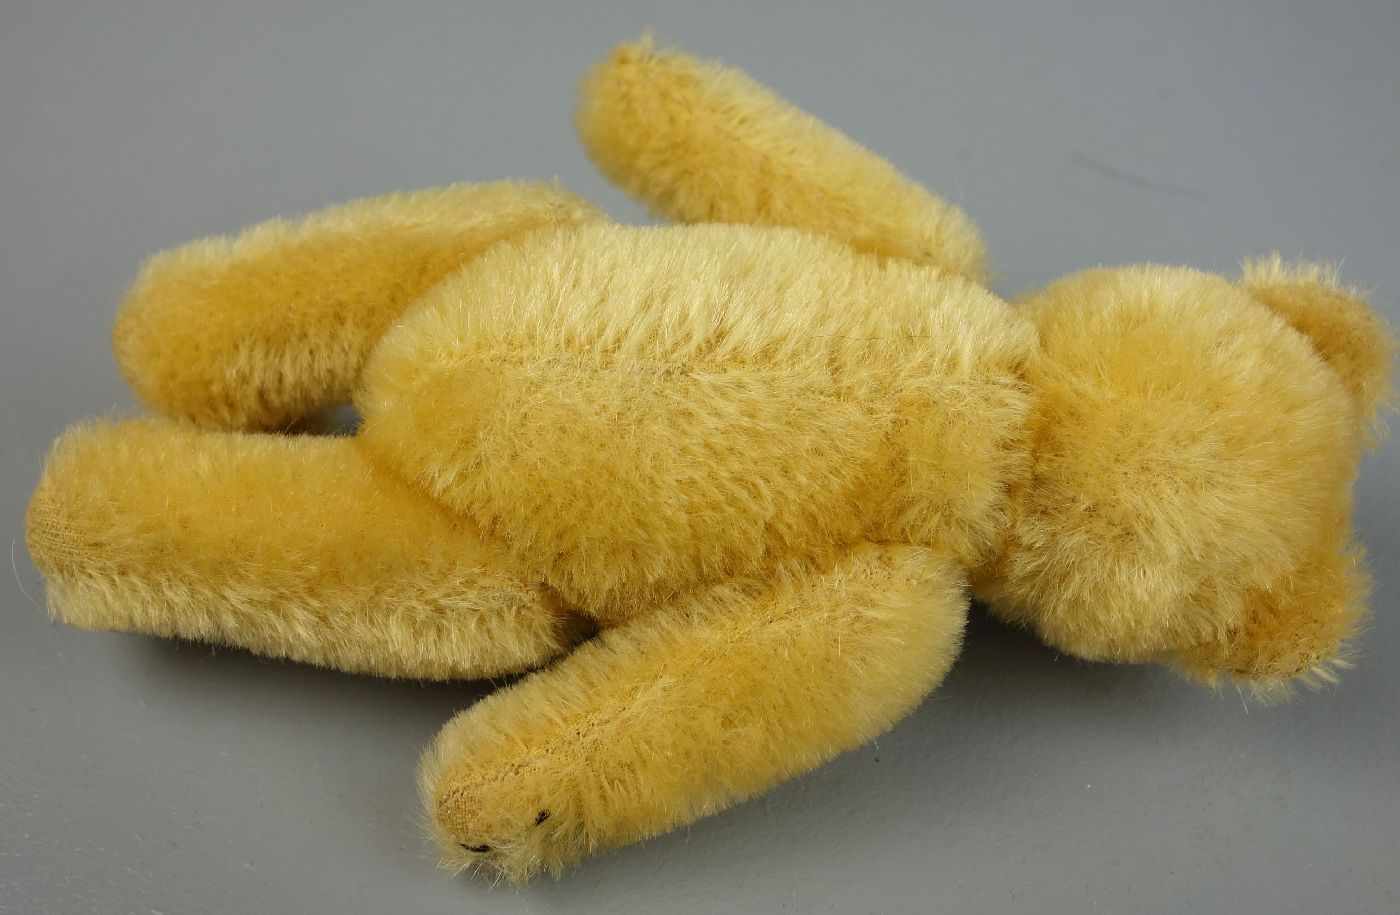 PLÜSCHTIERE / PLÜSCHFIGUREN: 3 Steiff-Teddys / Teddybären / teddy bears, 20. Jh., Manufaktur Steiff. - Image 6 of 11